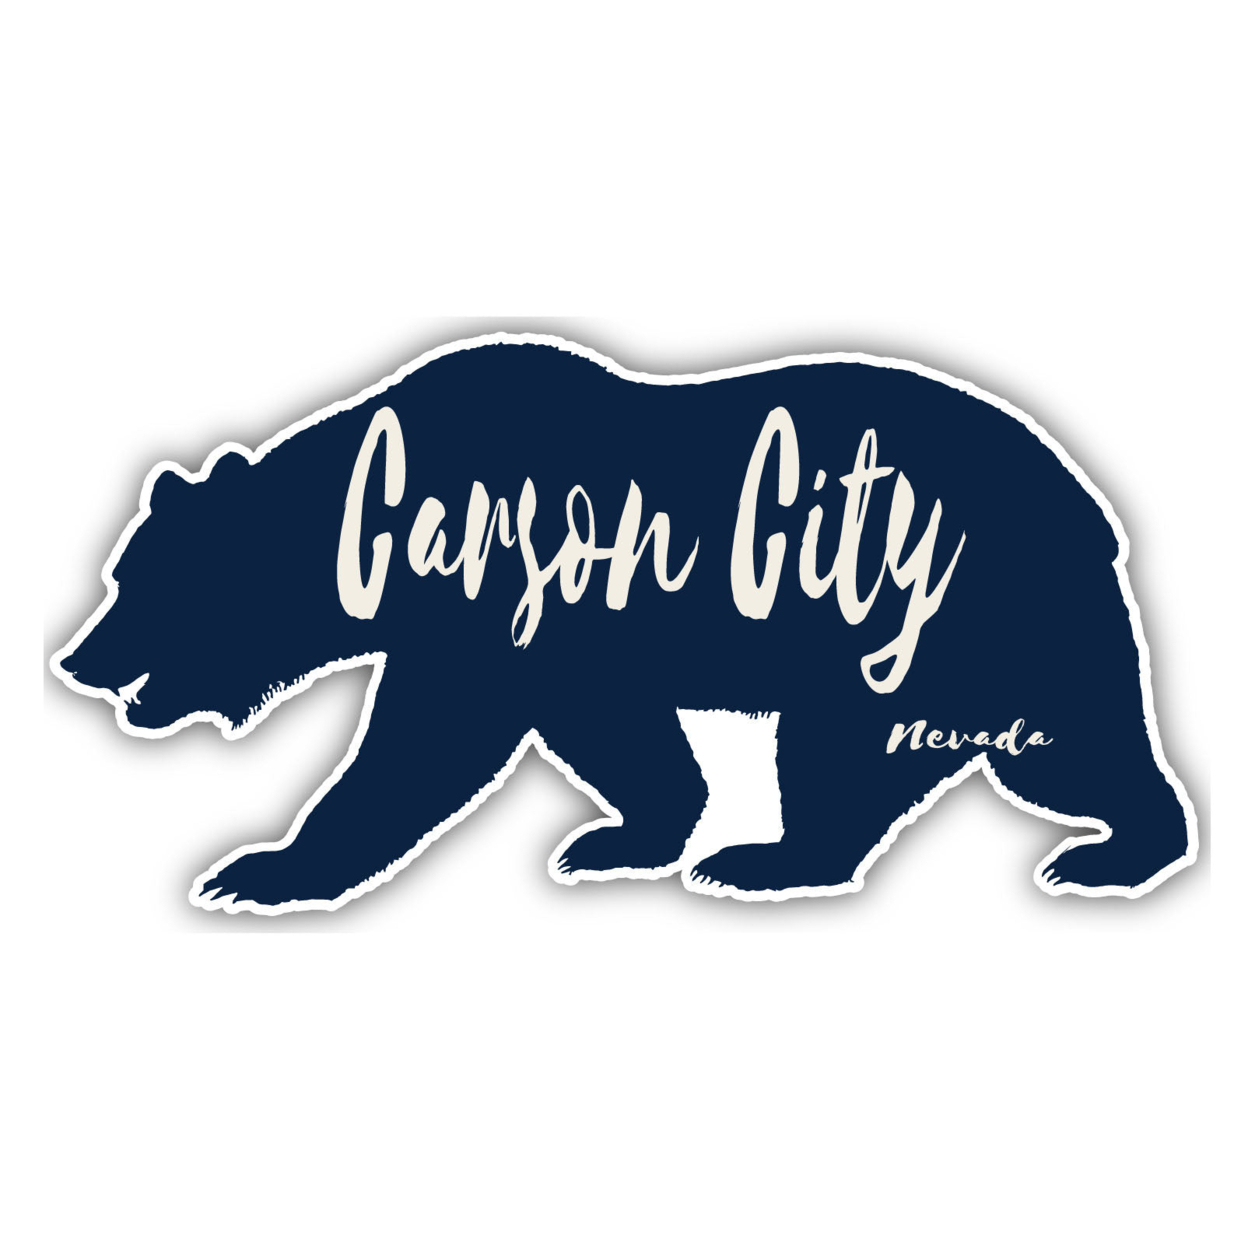 Carson City Nevada Souvenir Decorative Stickers (Choose Theme And Size) - Single Unit, 8-Inch, Bear